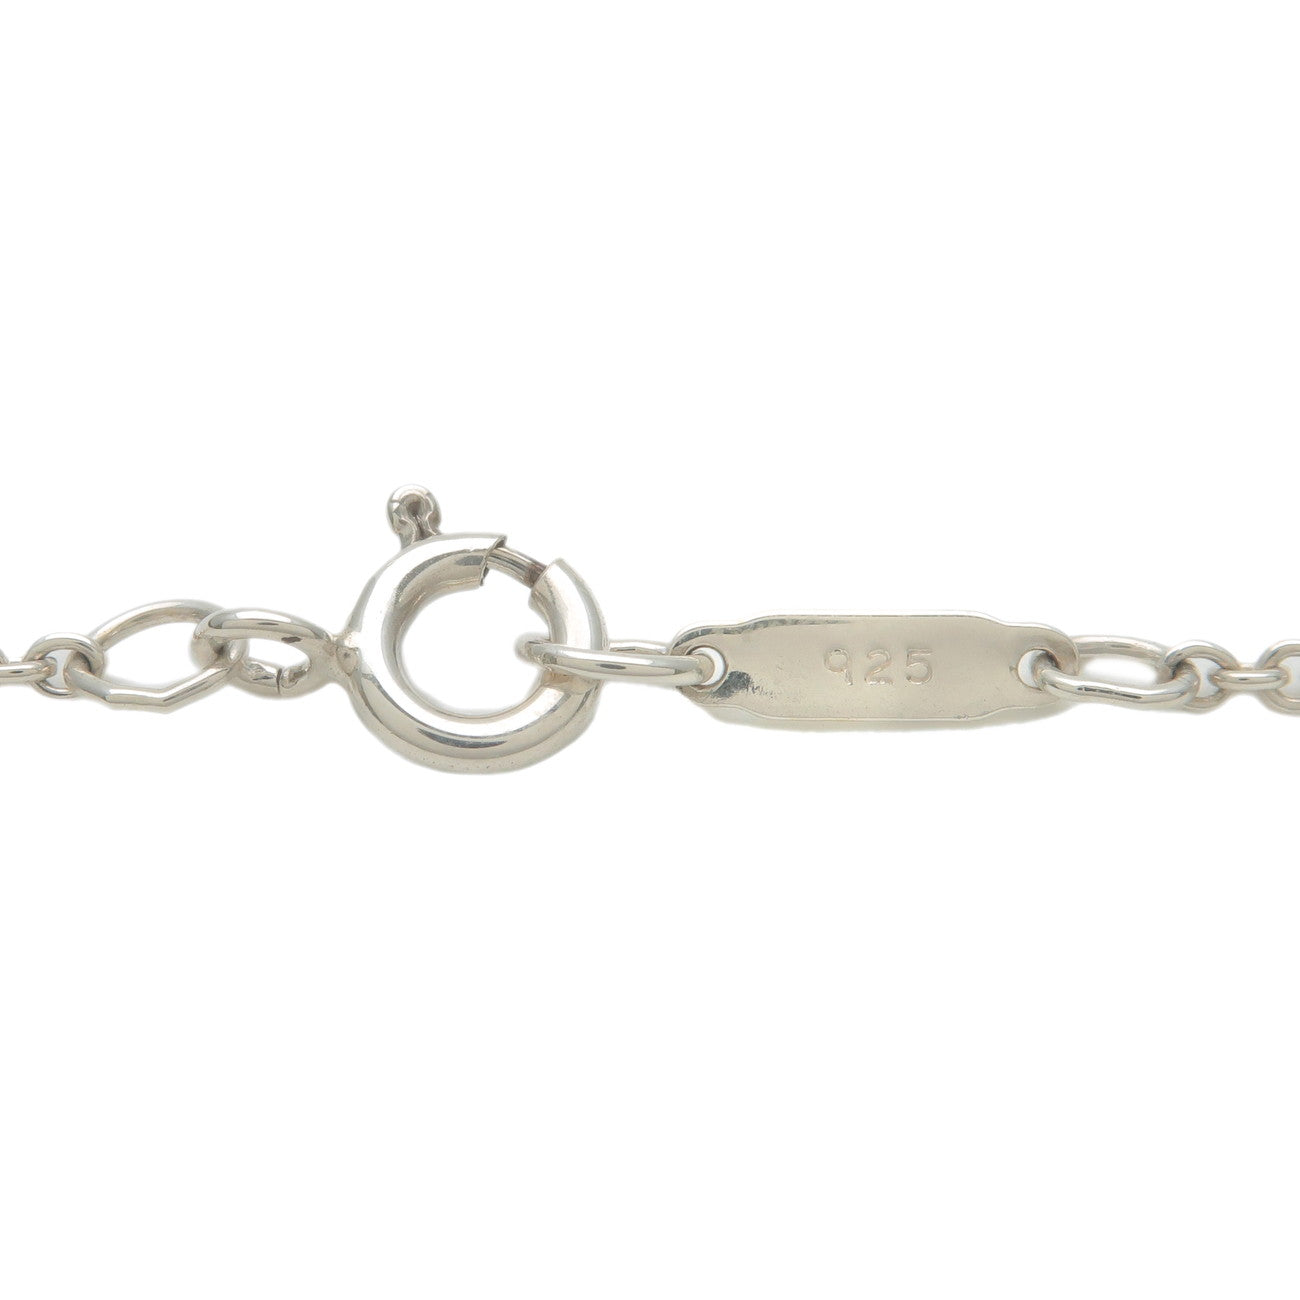 Tiffany&Co. Signature Cross Necklace K18YG 750YG SV925 Silver